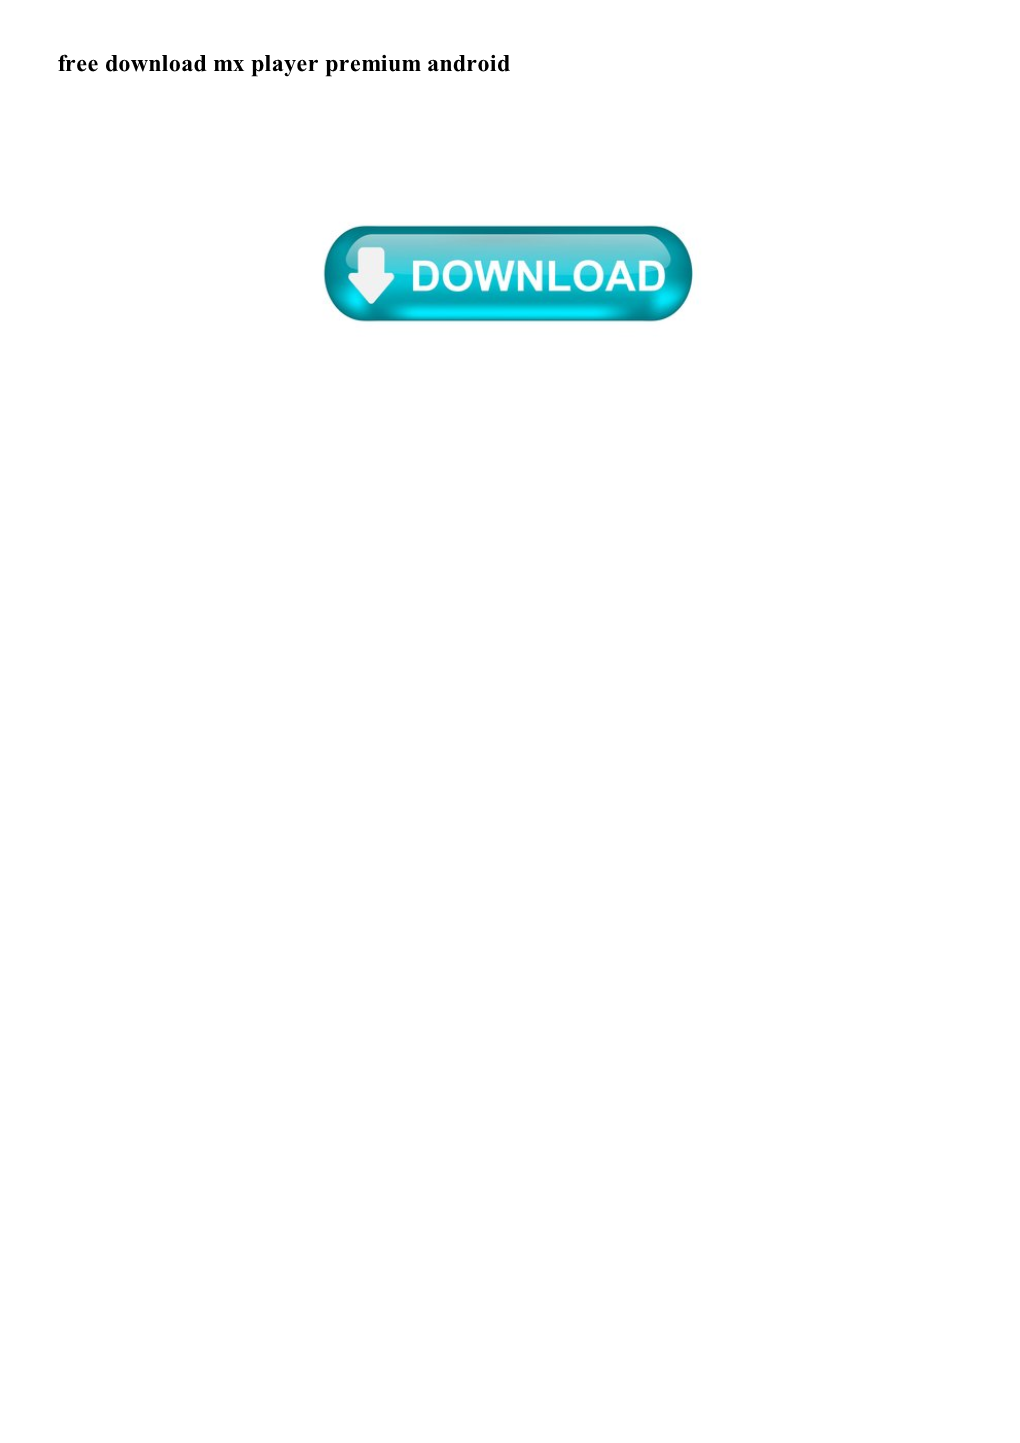 Free Download Mx Player Premium Android MX Player Pro Apk Mod 1.38.1 Full Unlocked